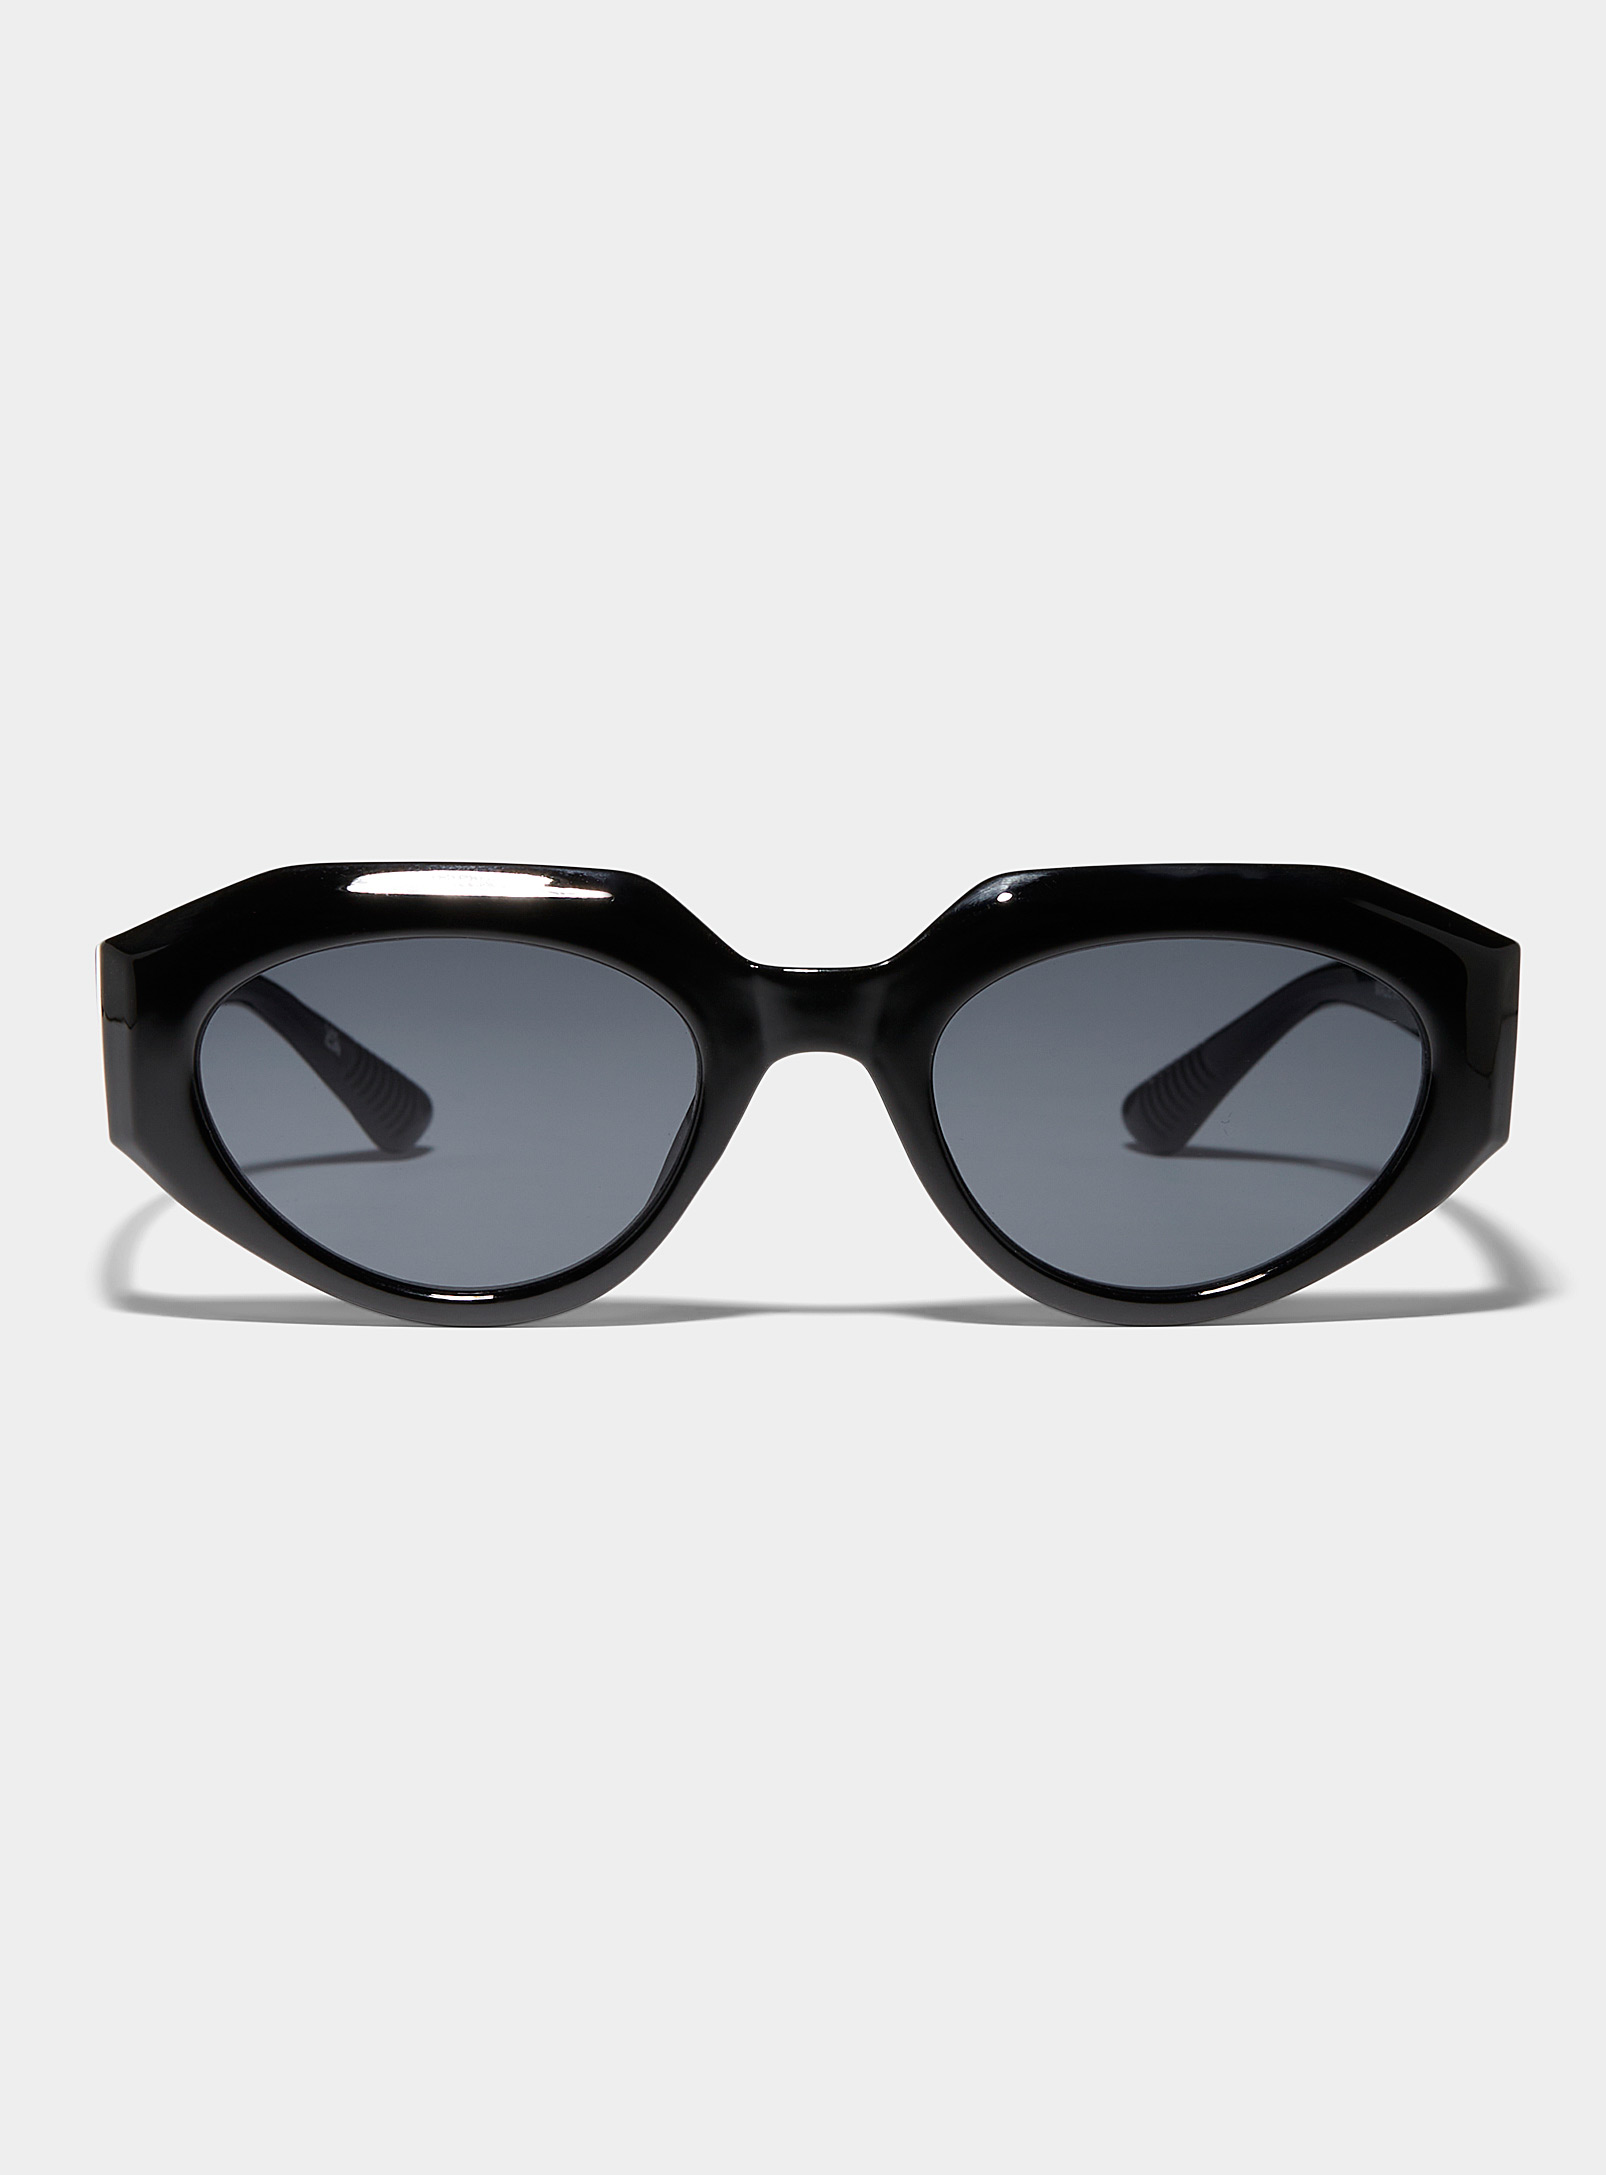 Aire Aphelion Octagonal Sunglasses In Black